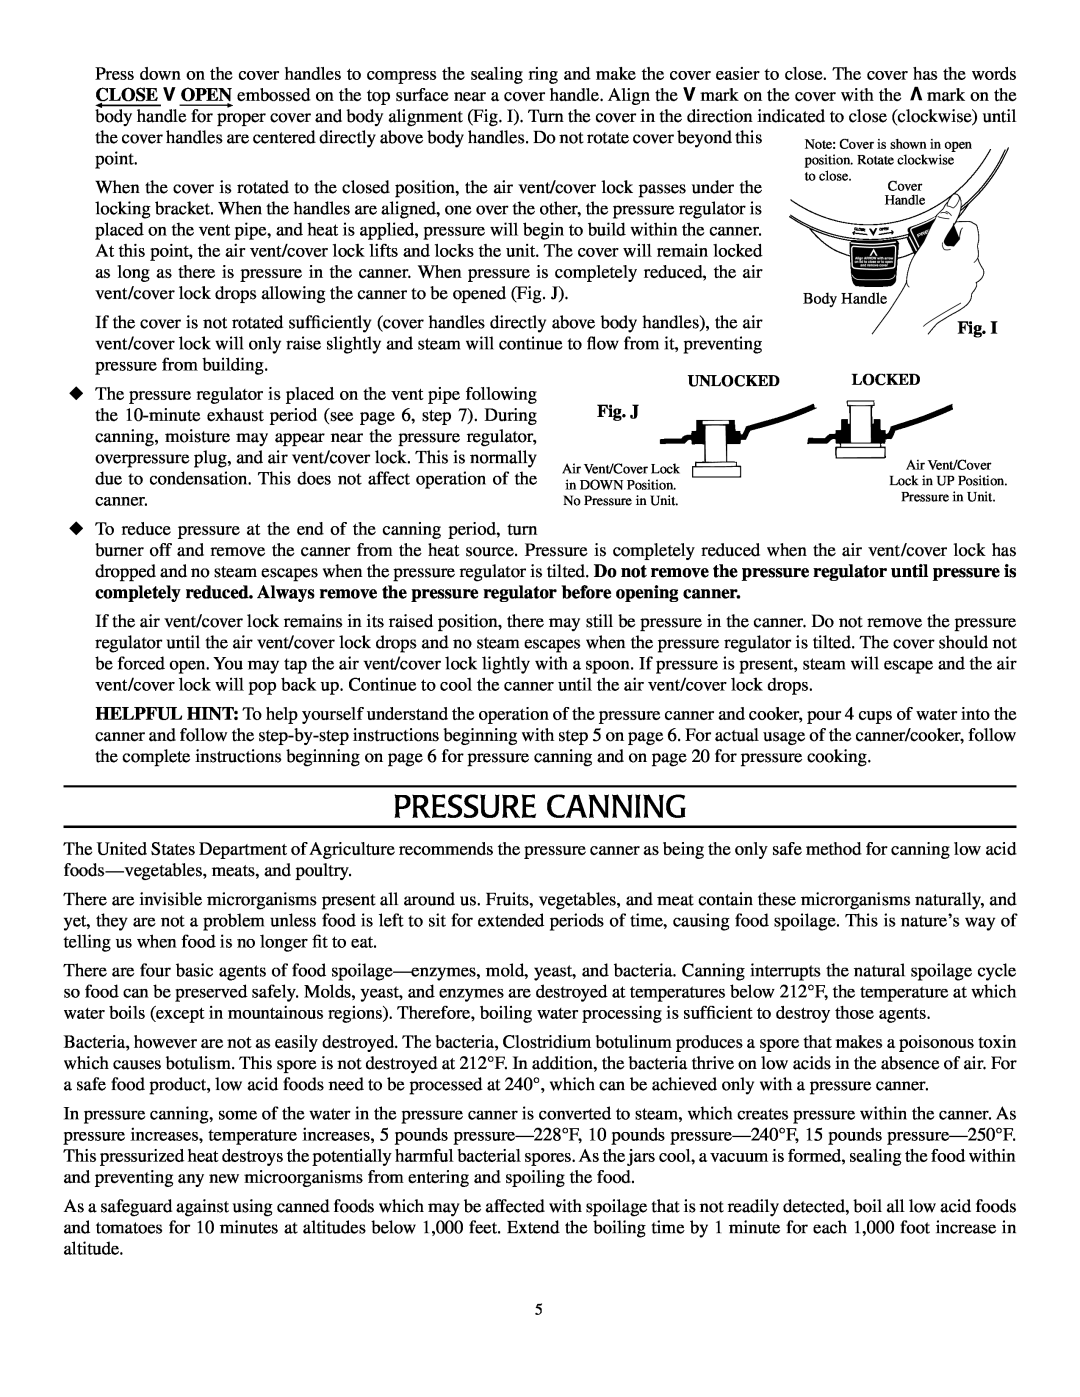 Presto Pressure Canner and Cooker warranty Pressure Canning 